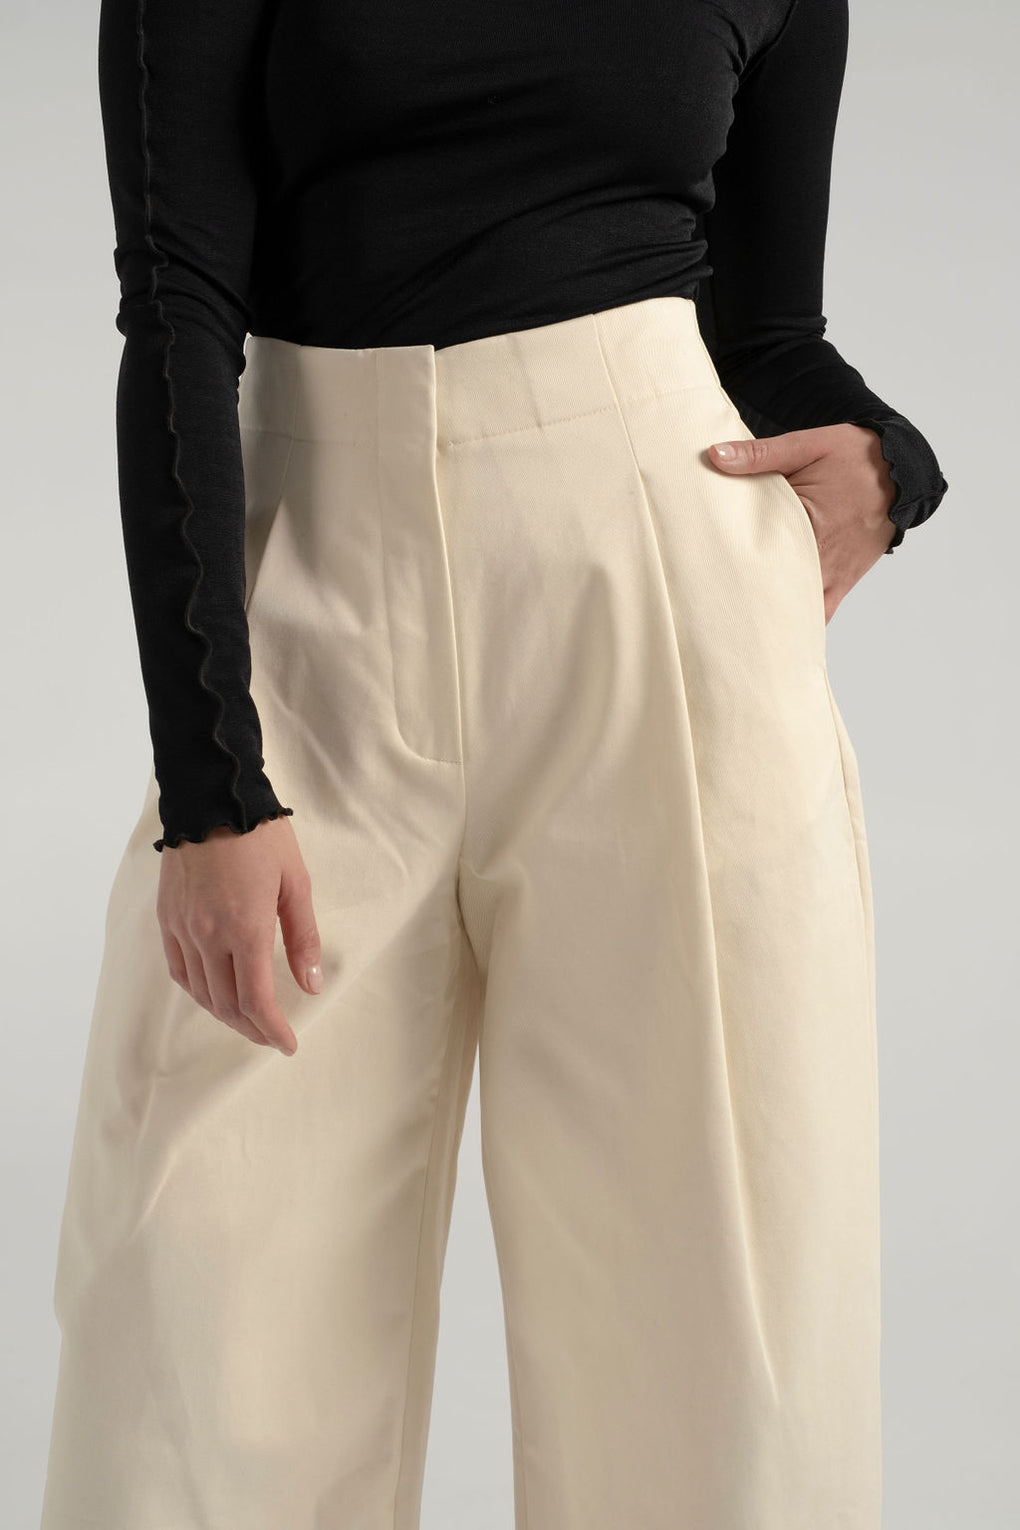 Studio Nicholson-Studio Nicholson Dordini Pants-wide leg trousers-cream trousers-white pants-Idun-St. Paul